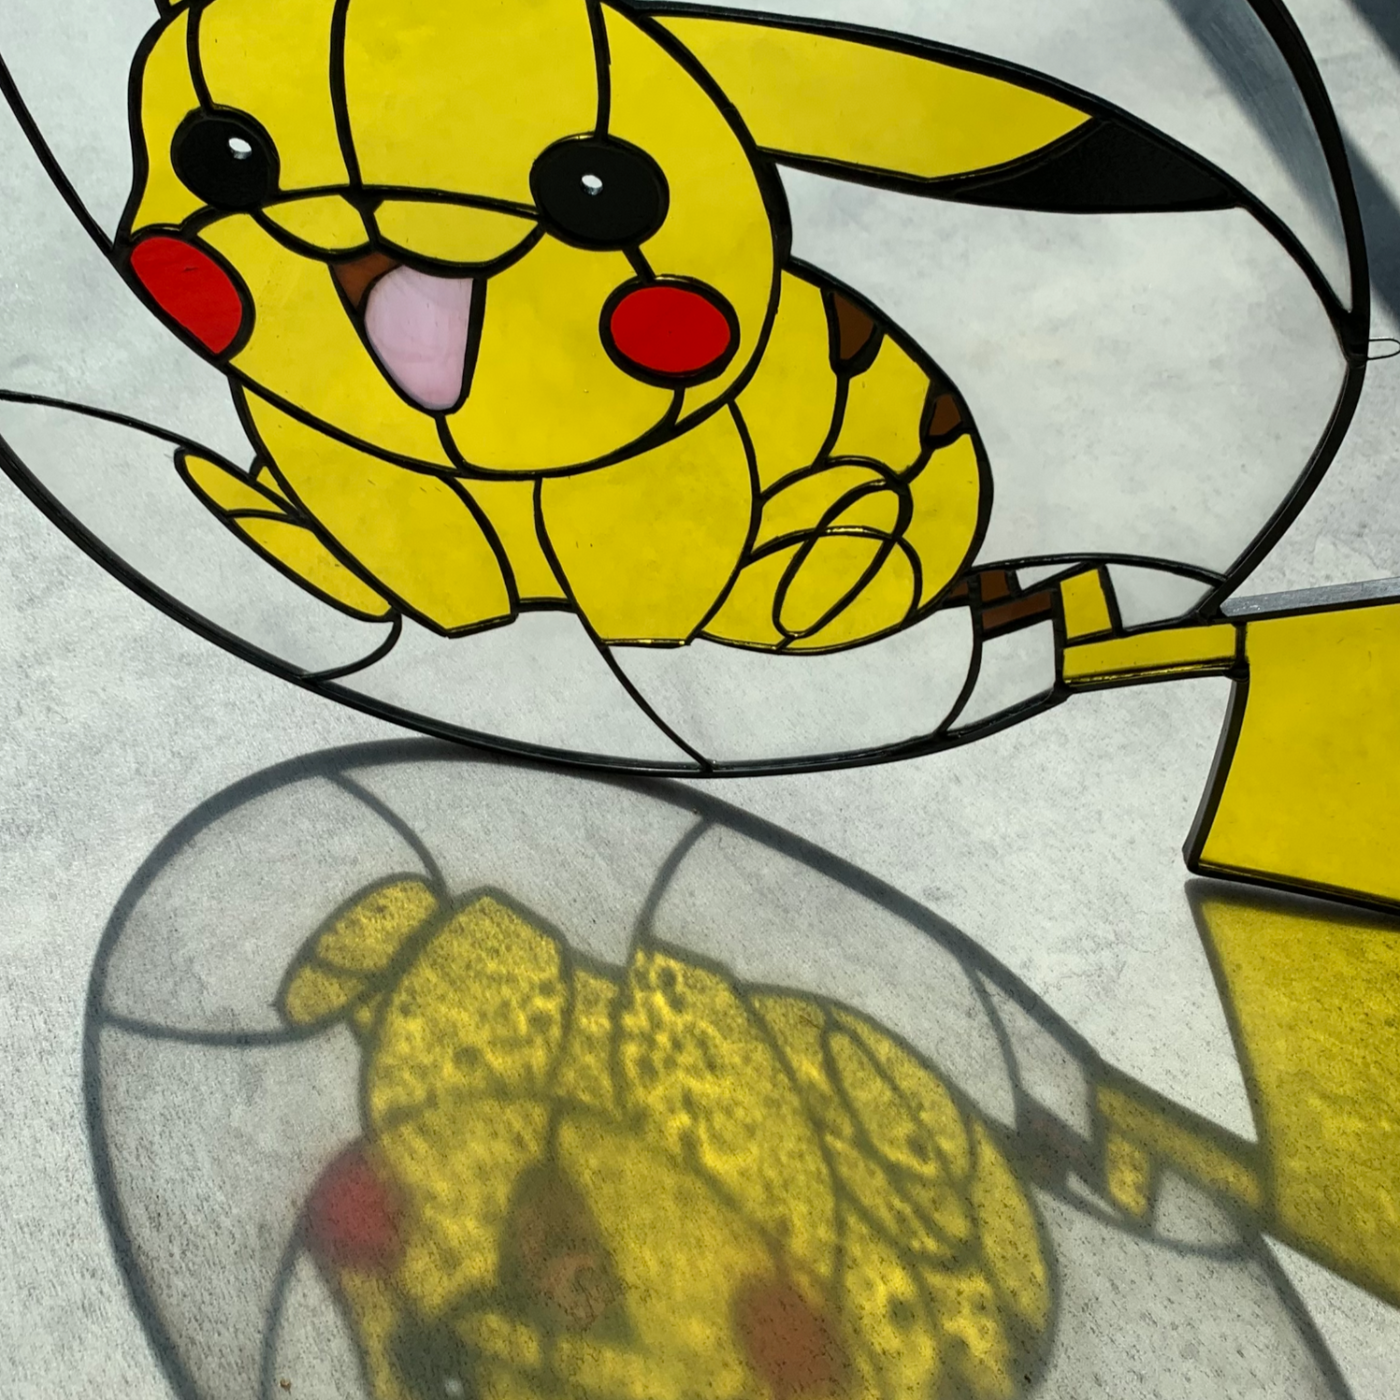 light shines through pikachu round stained glass suncatcher